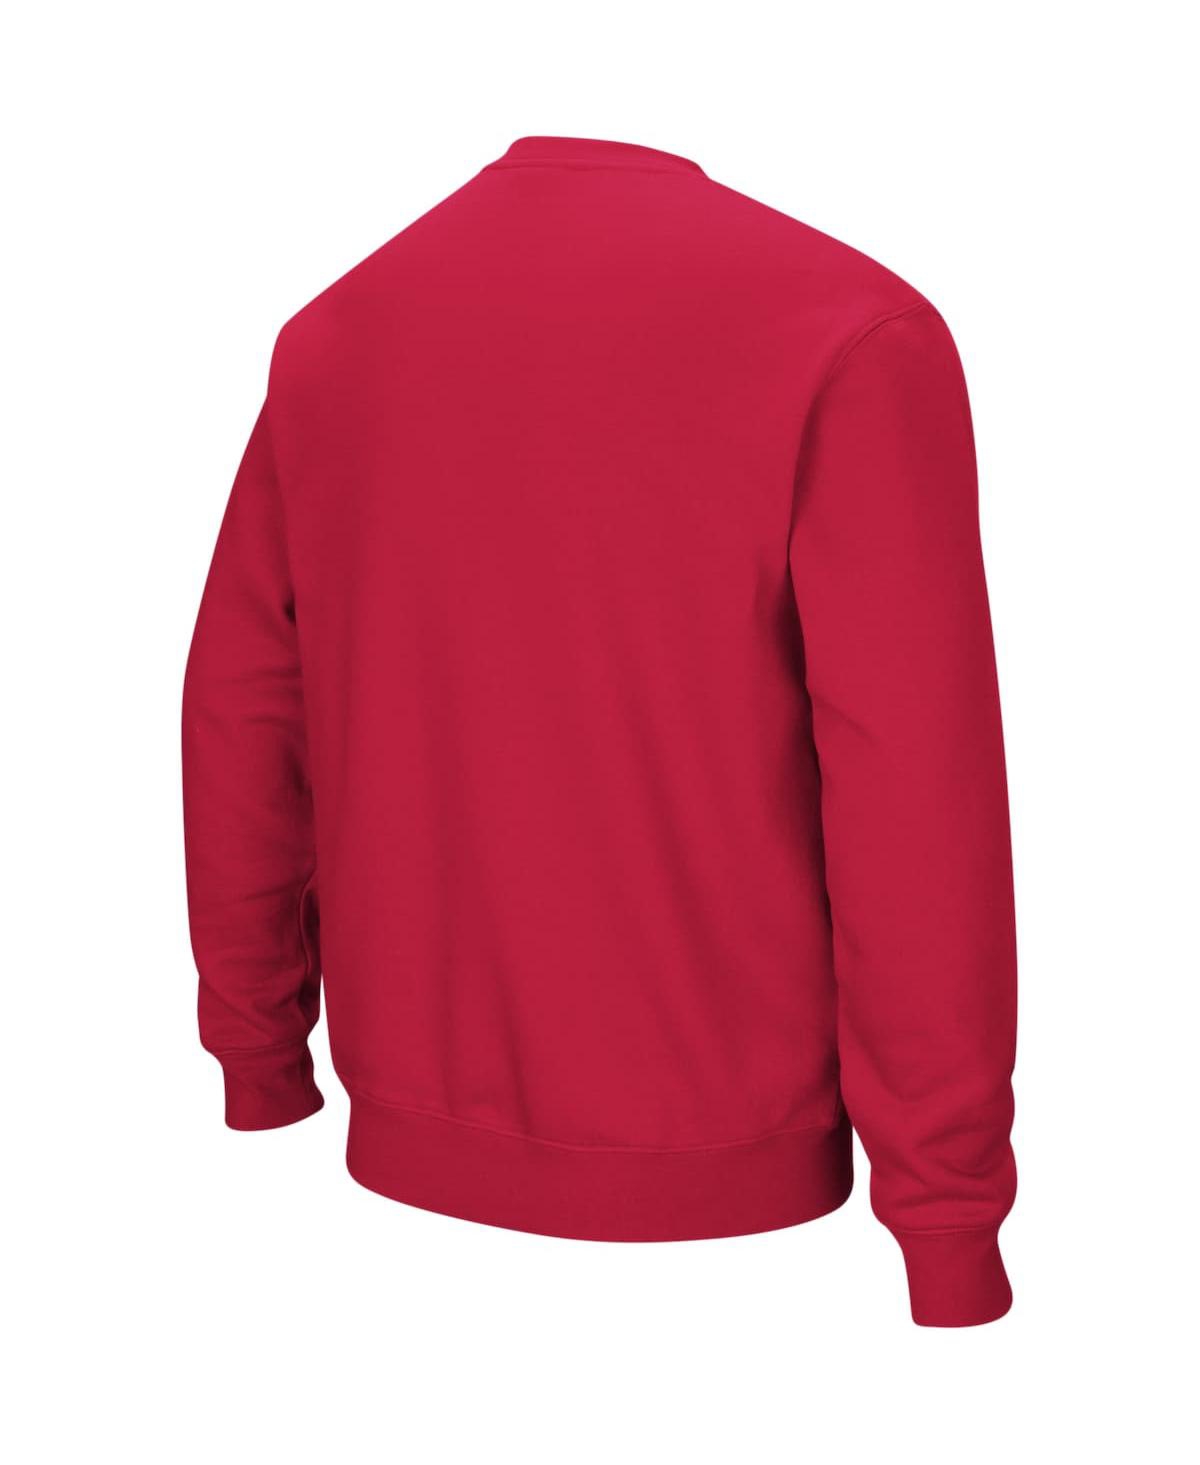 Shop Colosseum Men's  Red Utah Utes Arch And Logo Crew Neck Sweatshirt